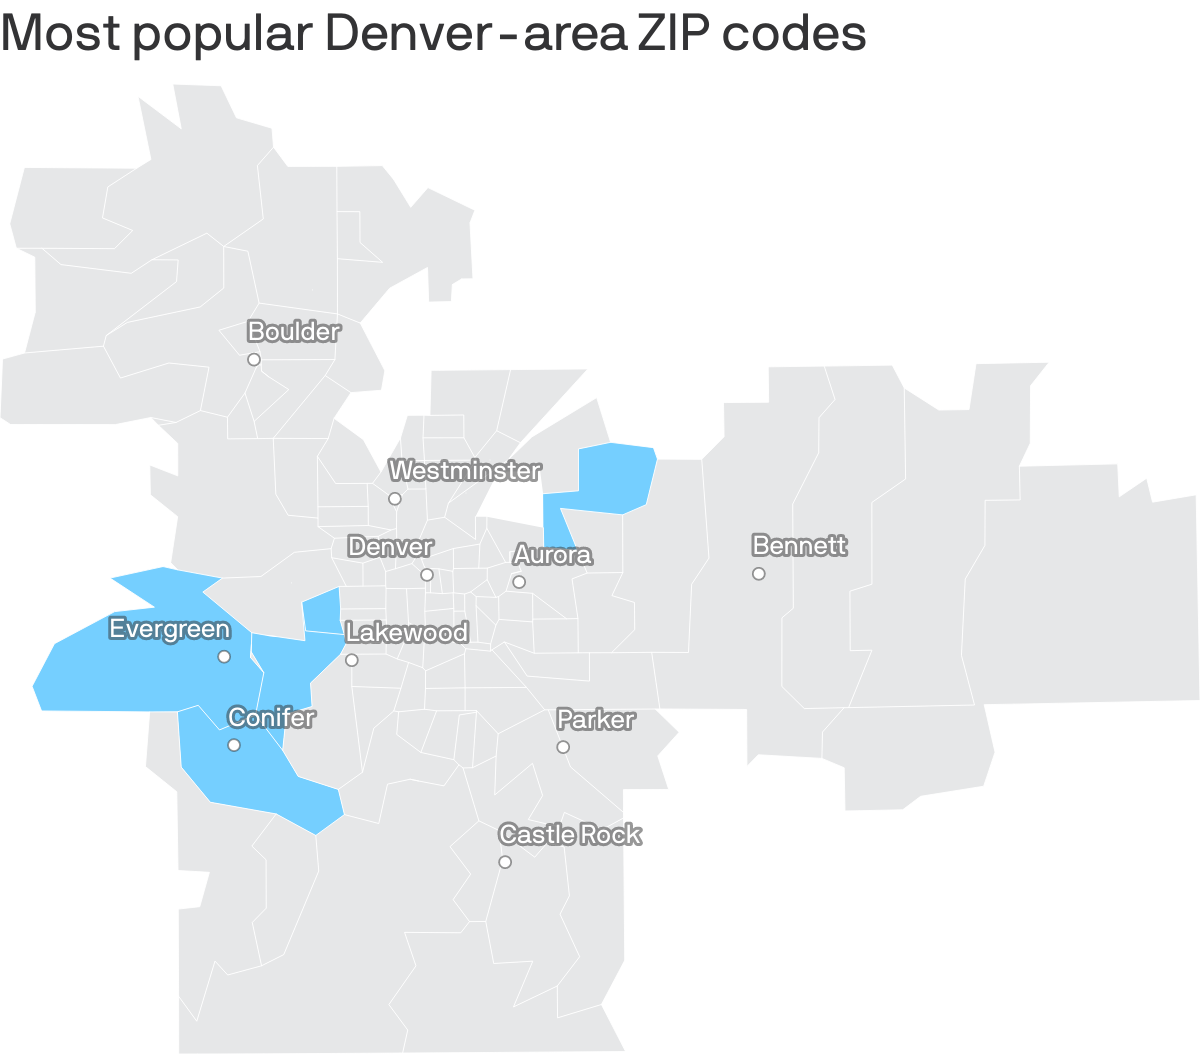 Most popular Denver-area zip codes